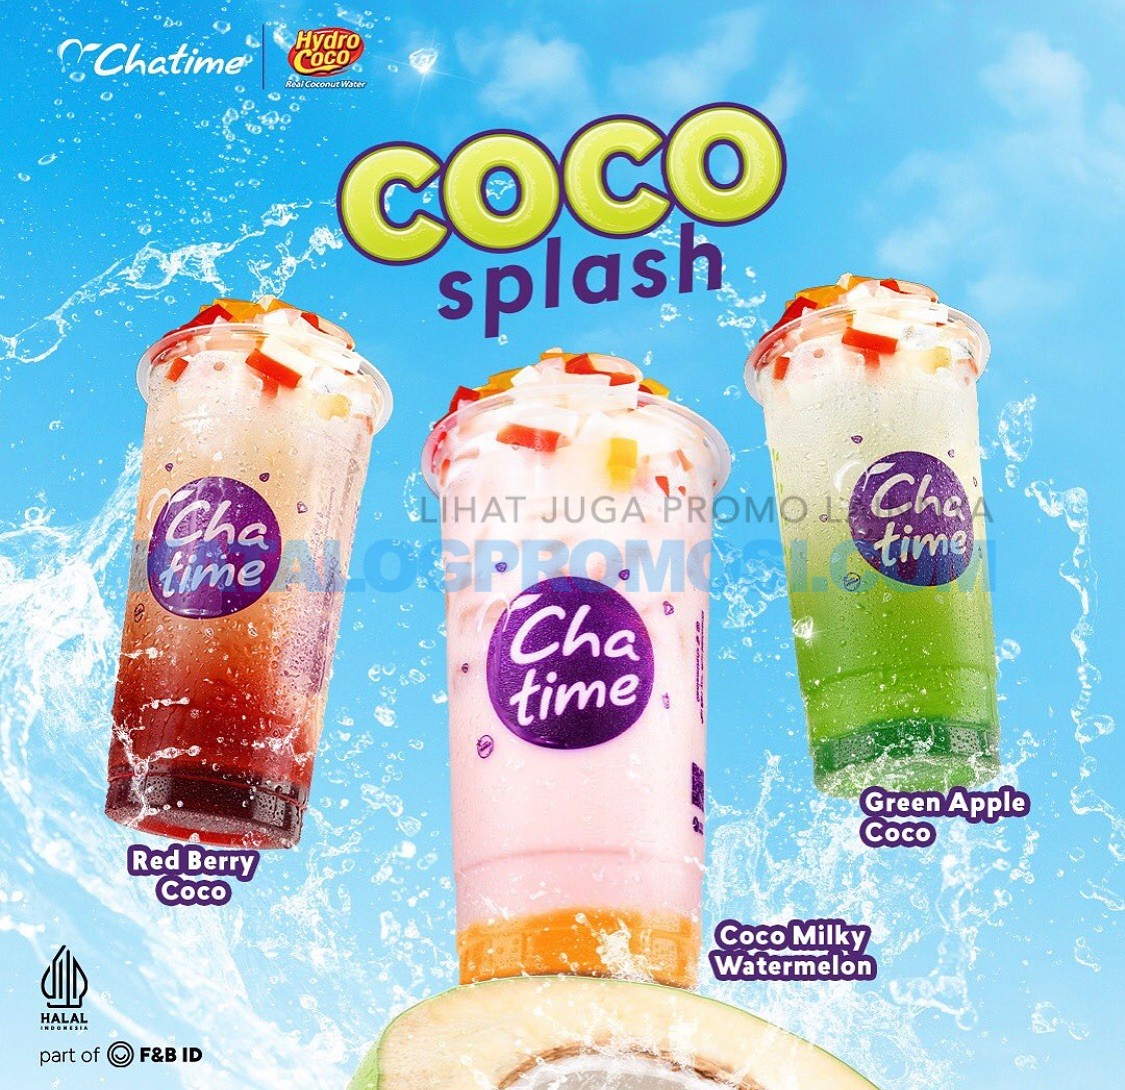 BARU Promo CHATIME x Hydro Coco – Coco Splash Series